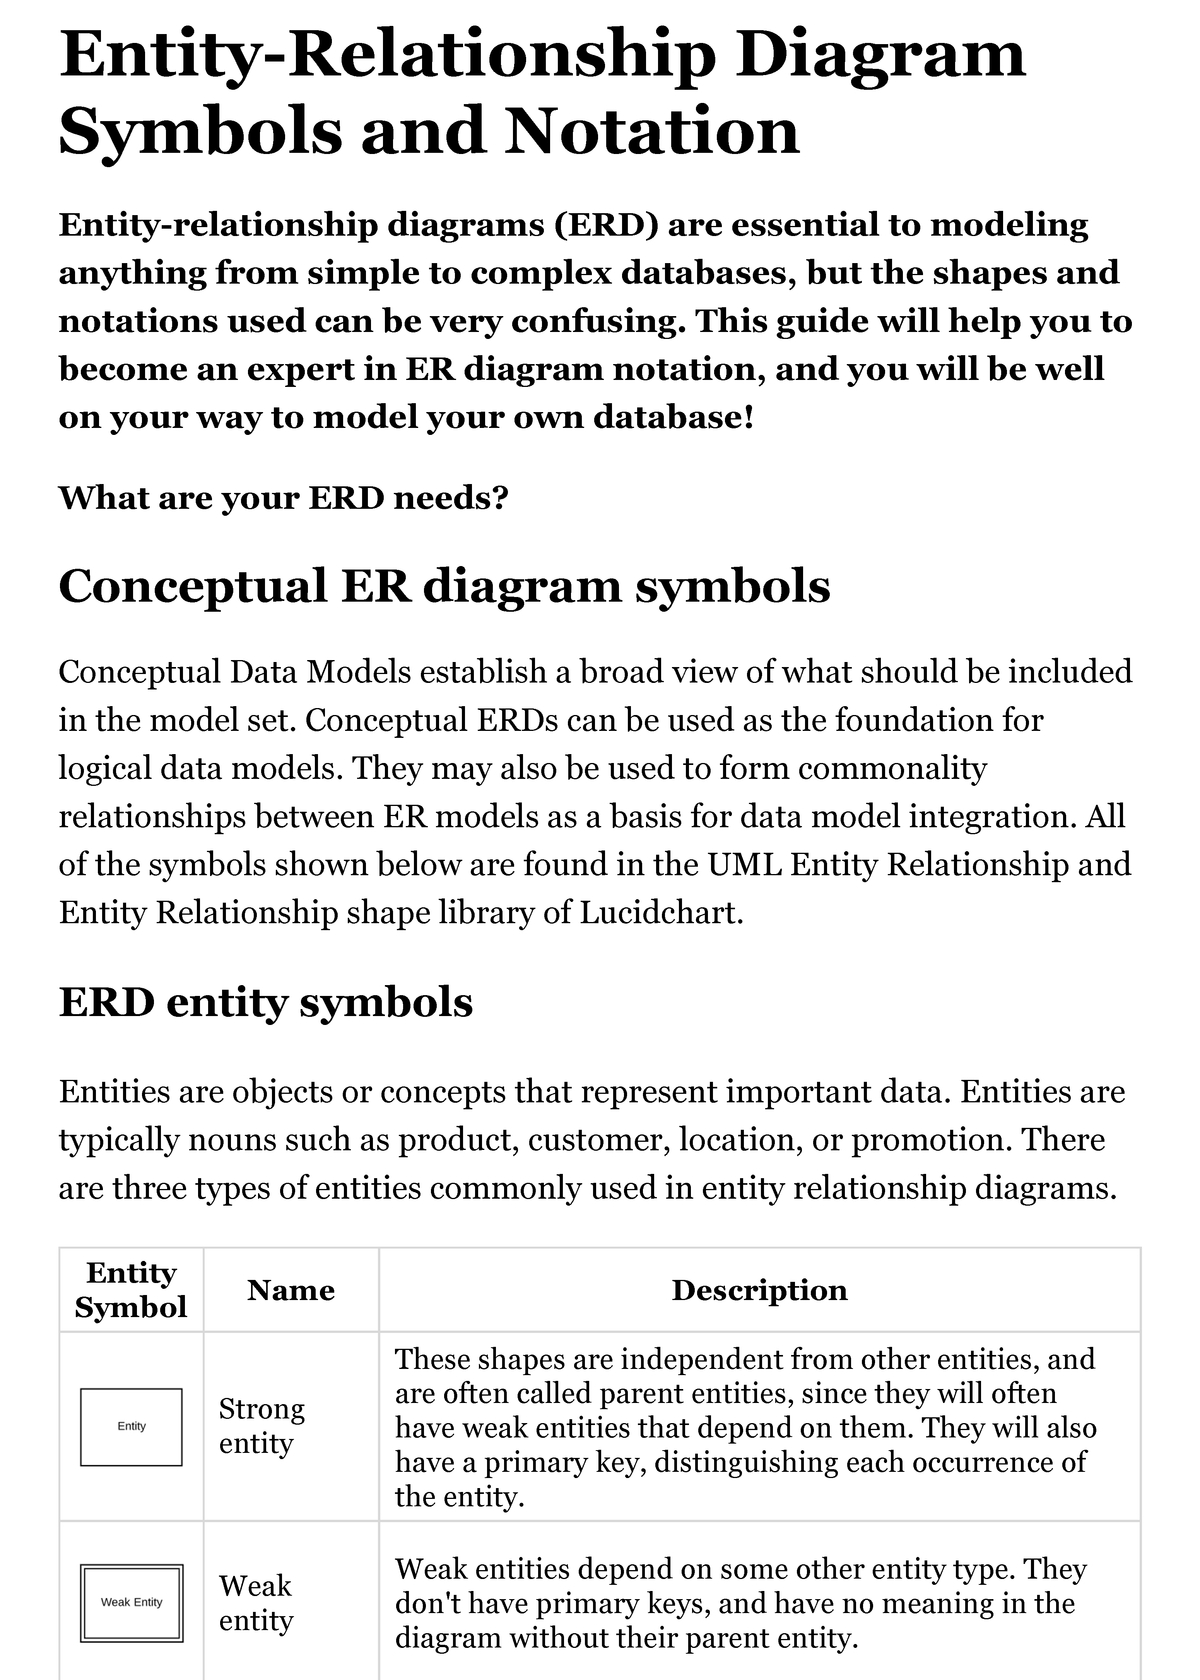 Entity-Relationship Diagram Symbols And Notation Lucidchart in Data Model Relationship Symbols